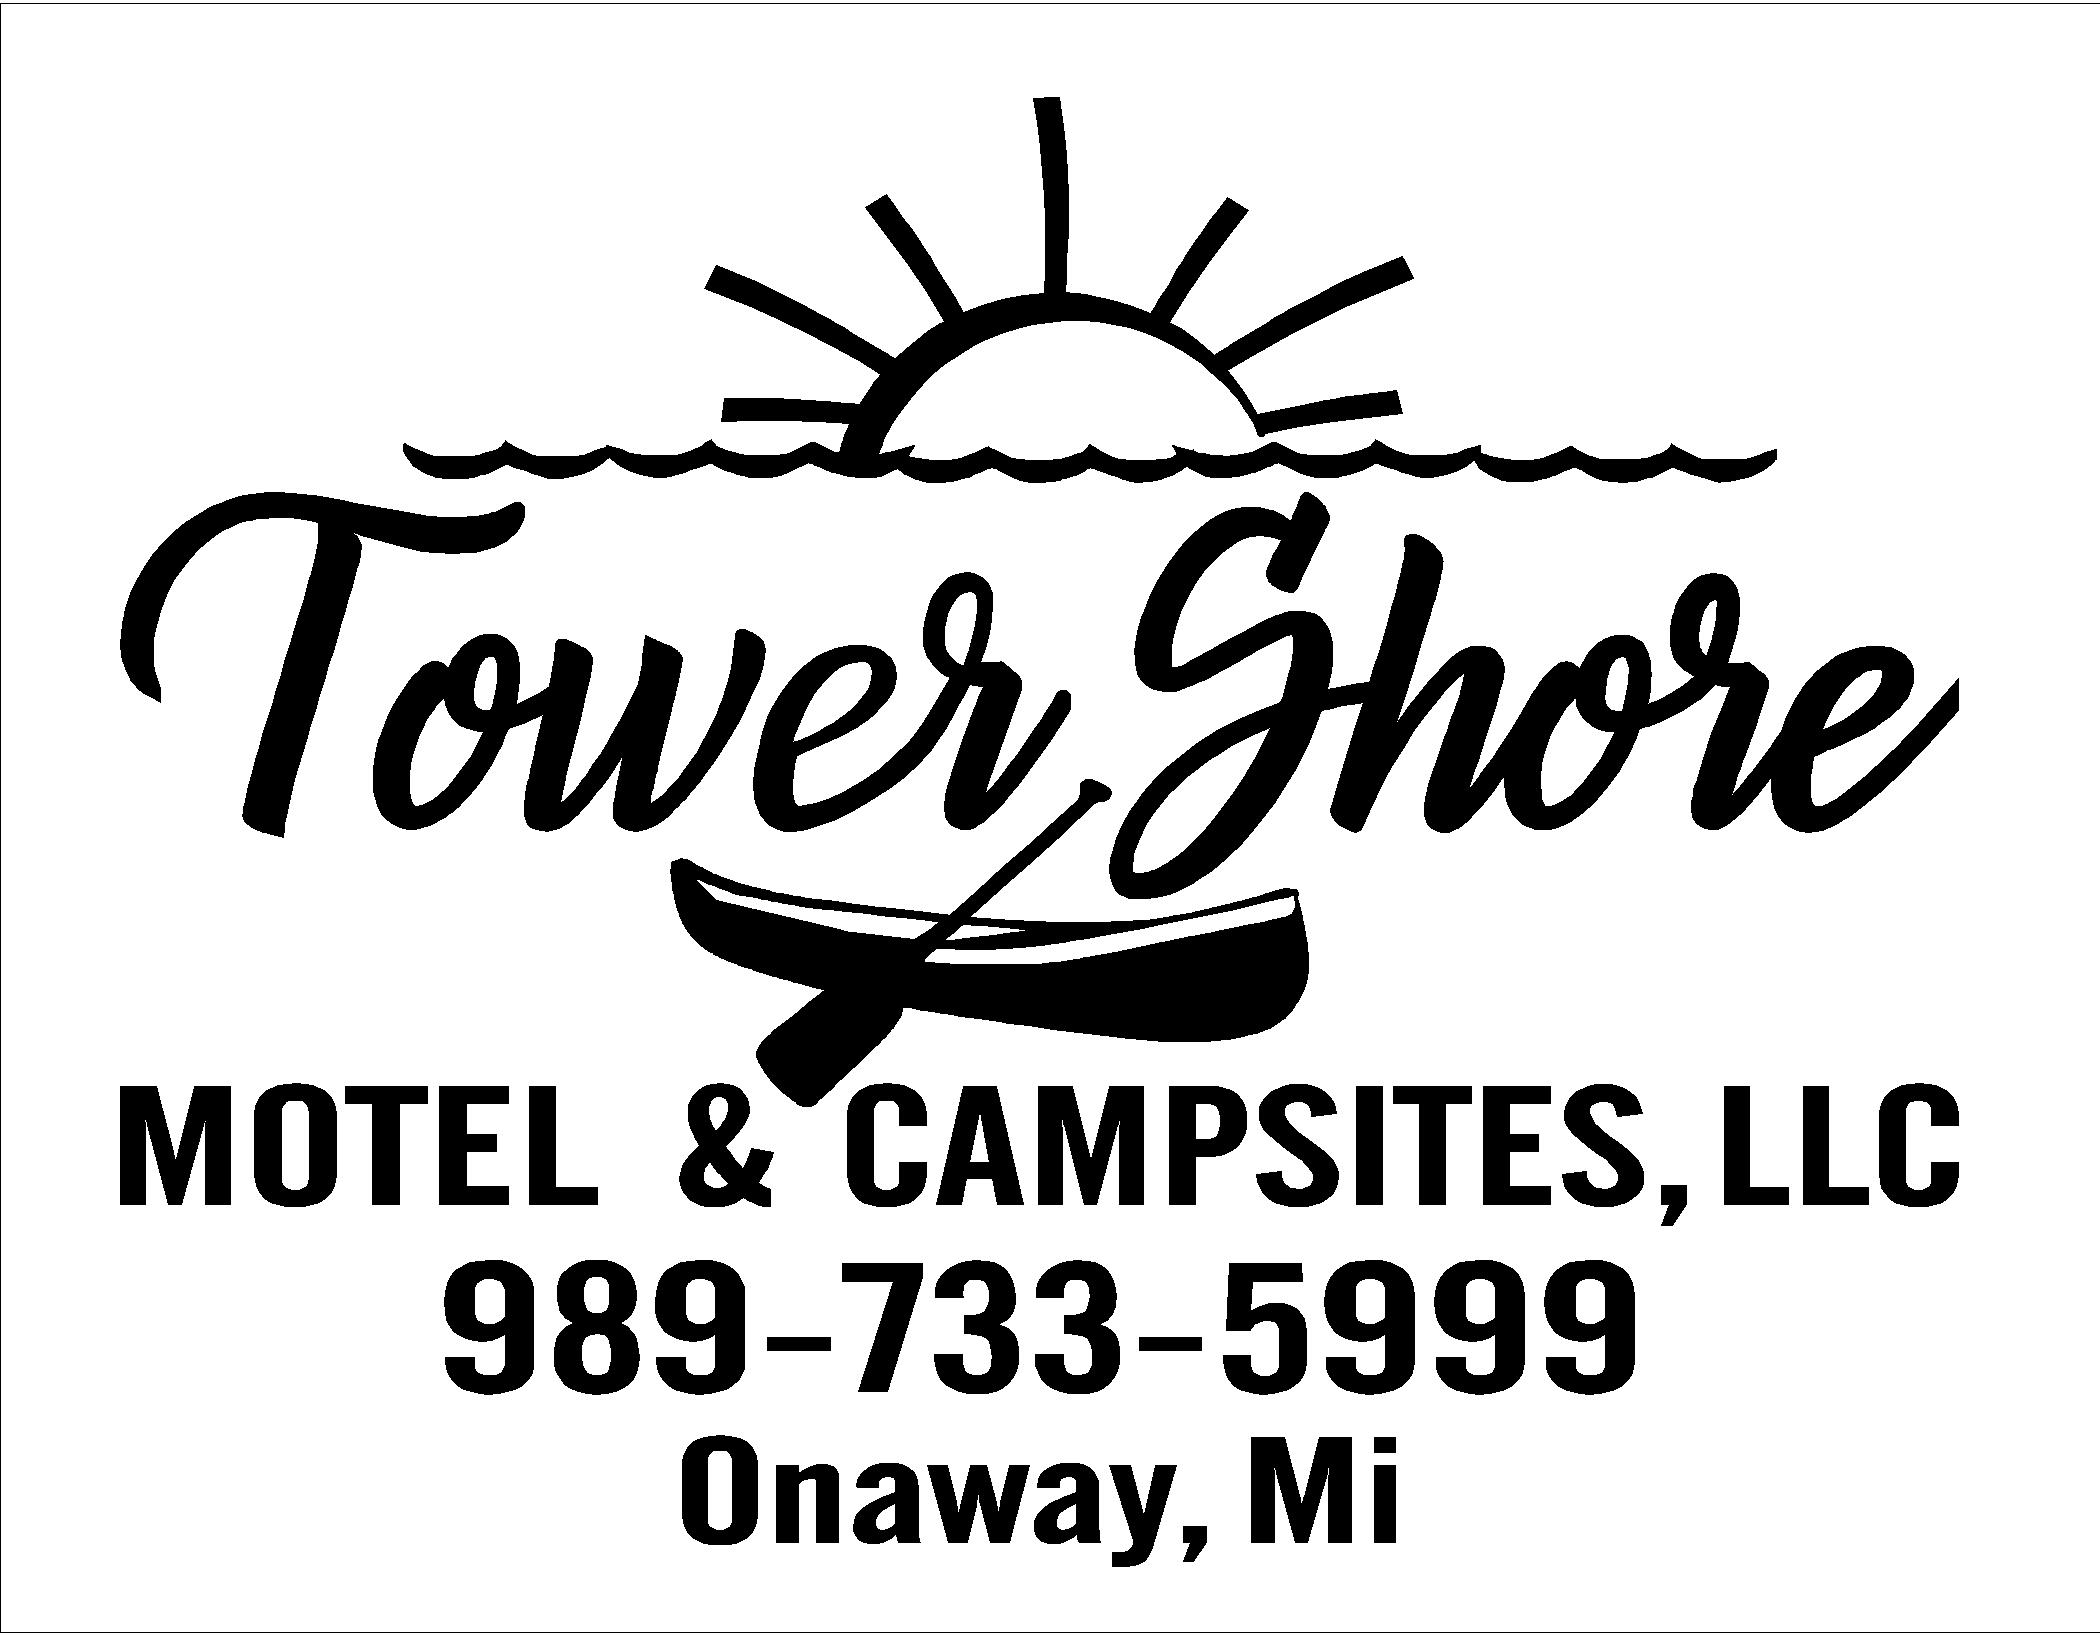 Tower Shore Motel